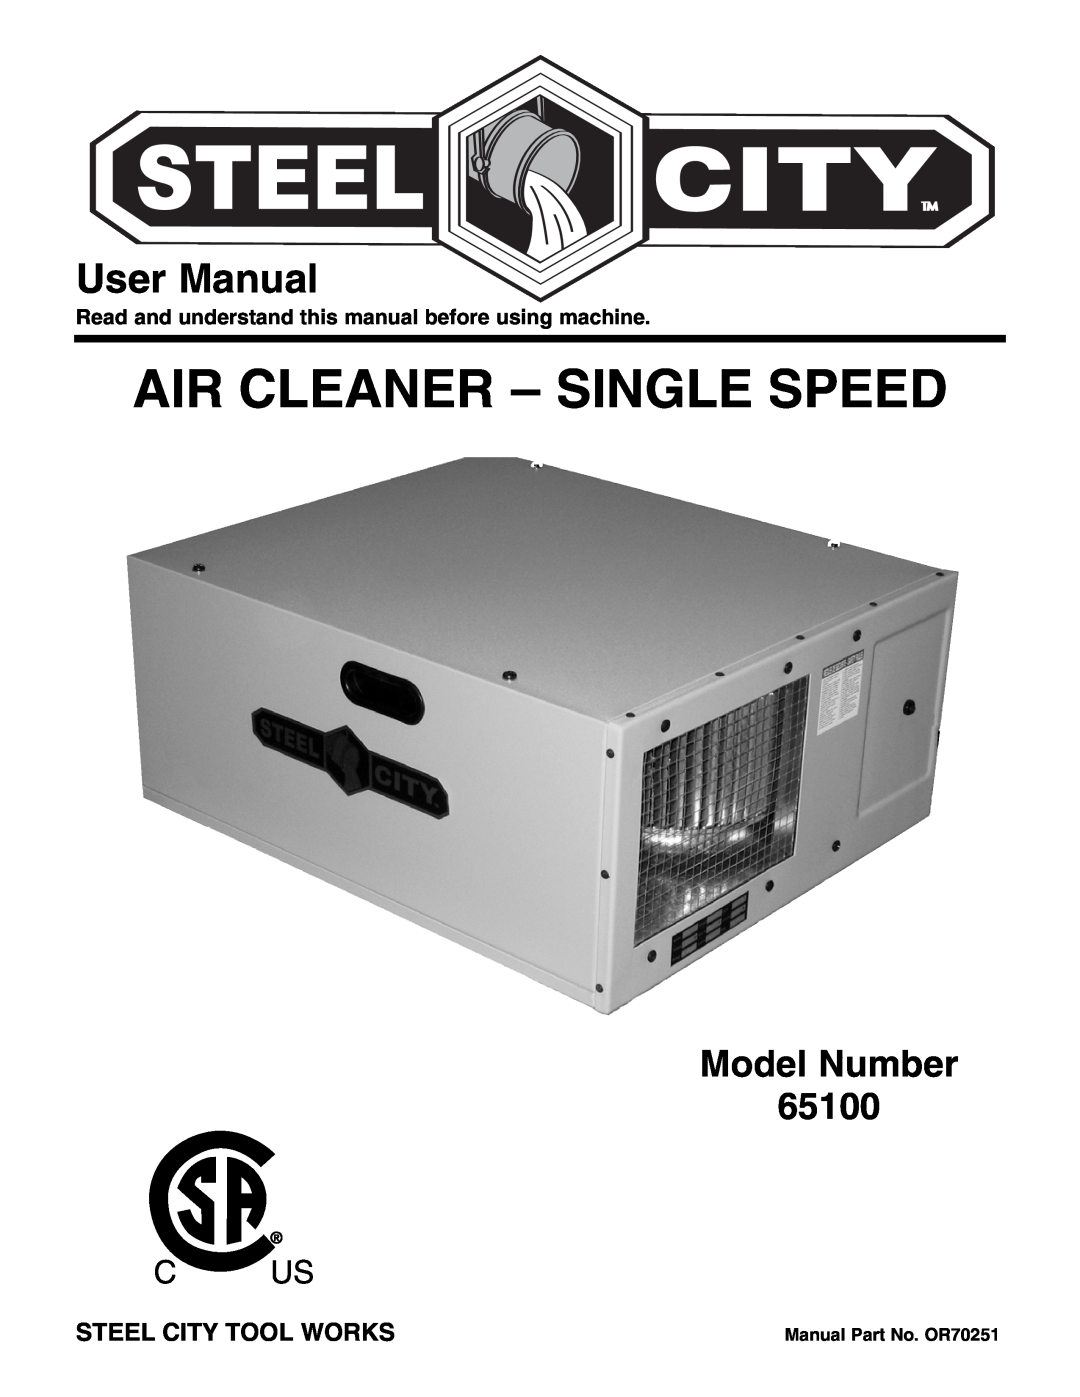 Craftsman user manual Air Cleaner - Single Speed, User Manual, Model Number 65100, C Us, Steel City Tool Works 